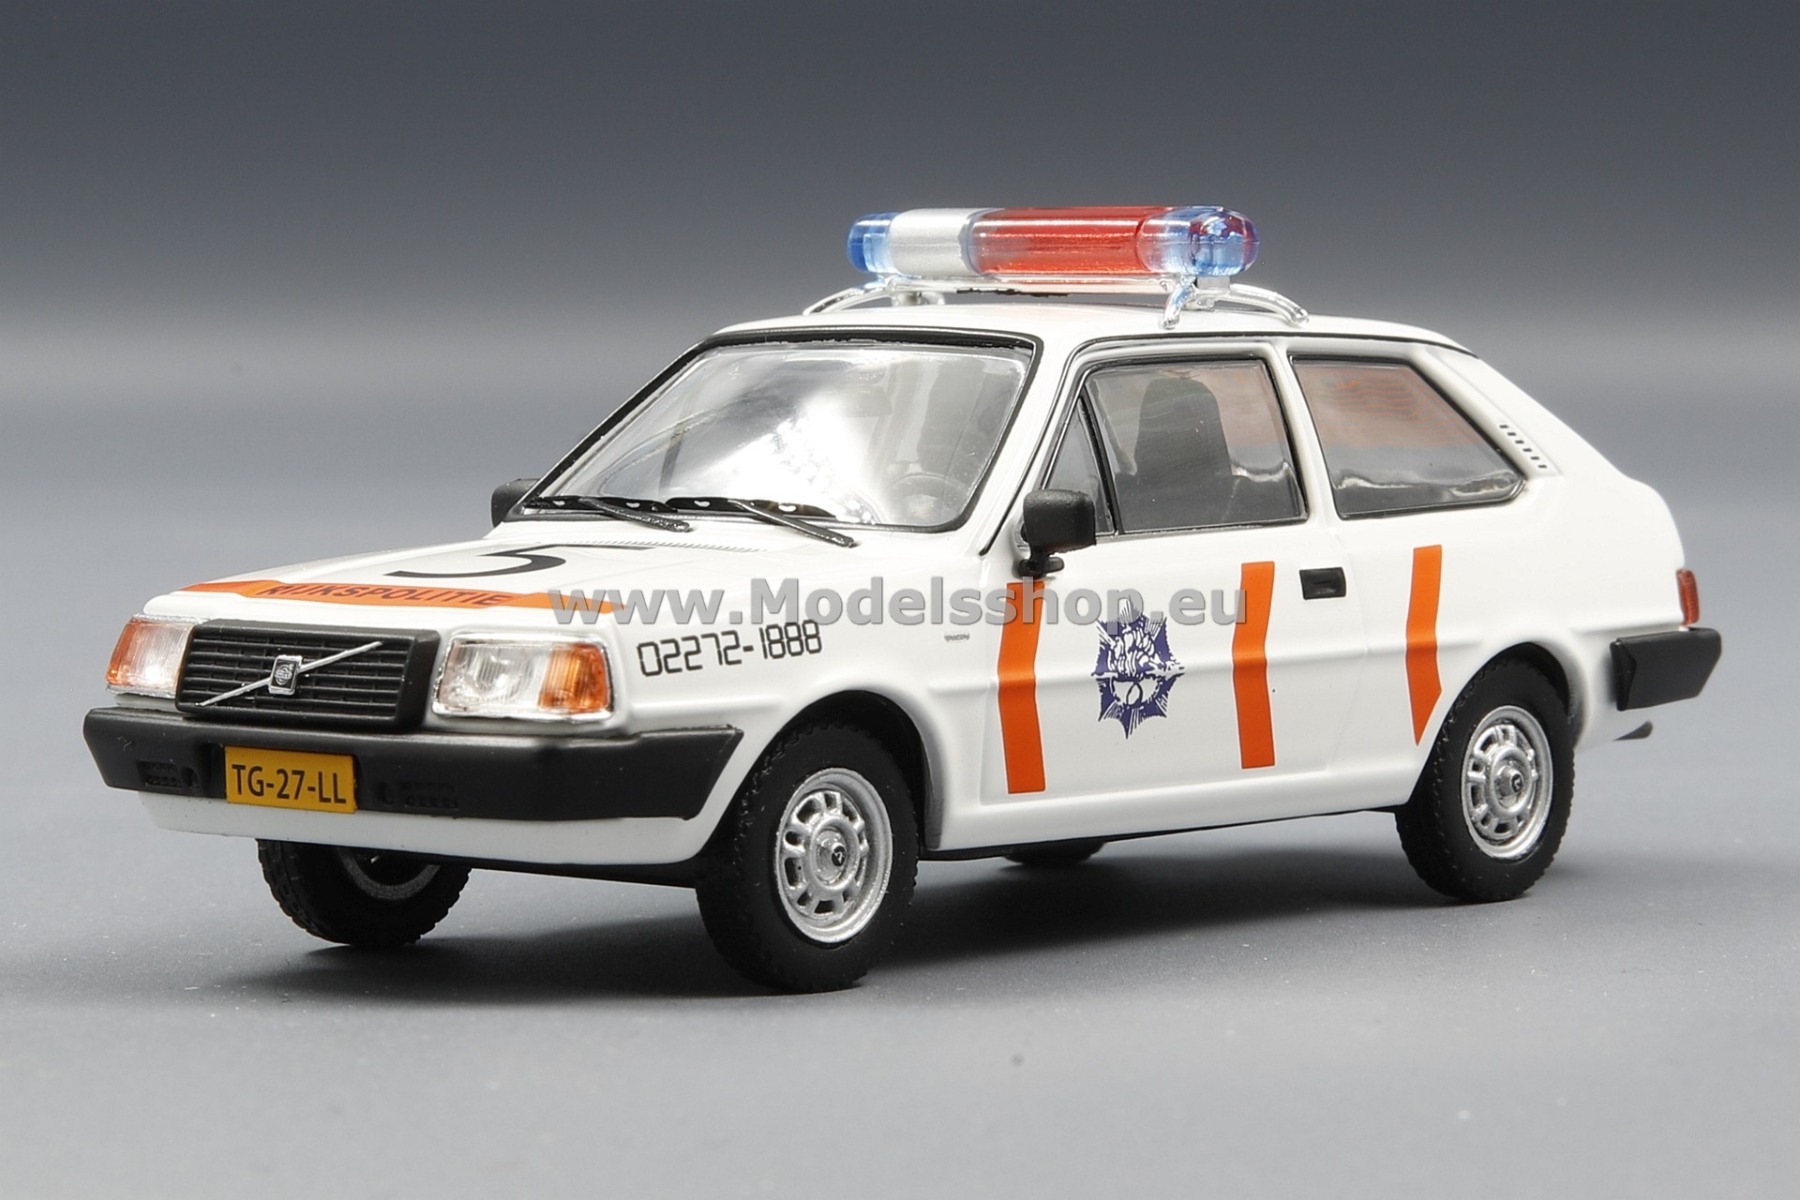 Volvo 343 1400, 1982 w. original long bumpers, Politie Wieringerwerf, police